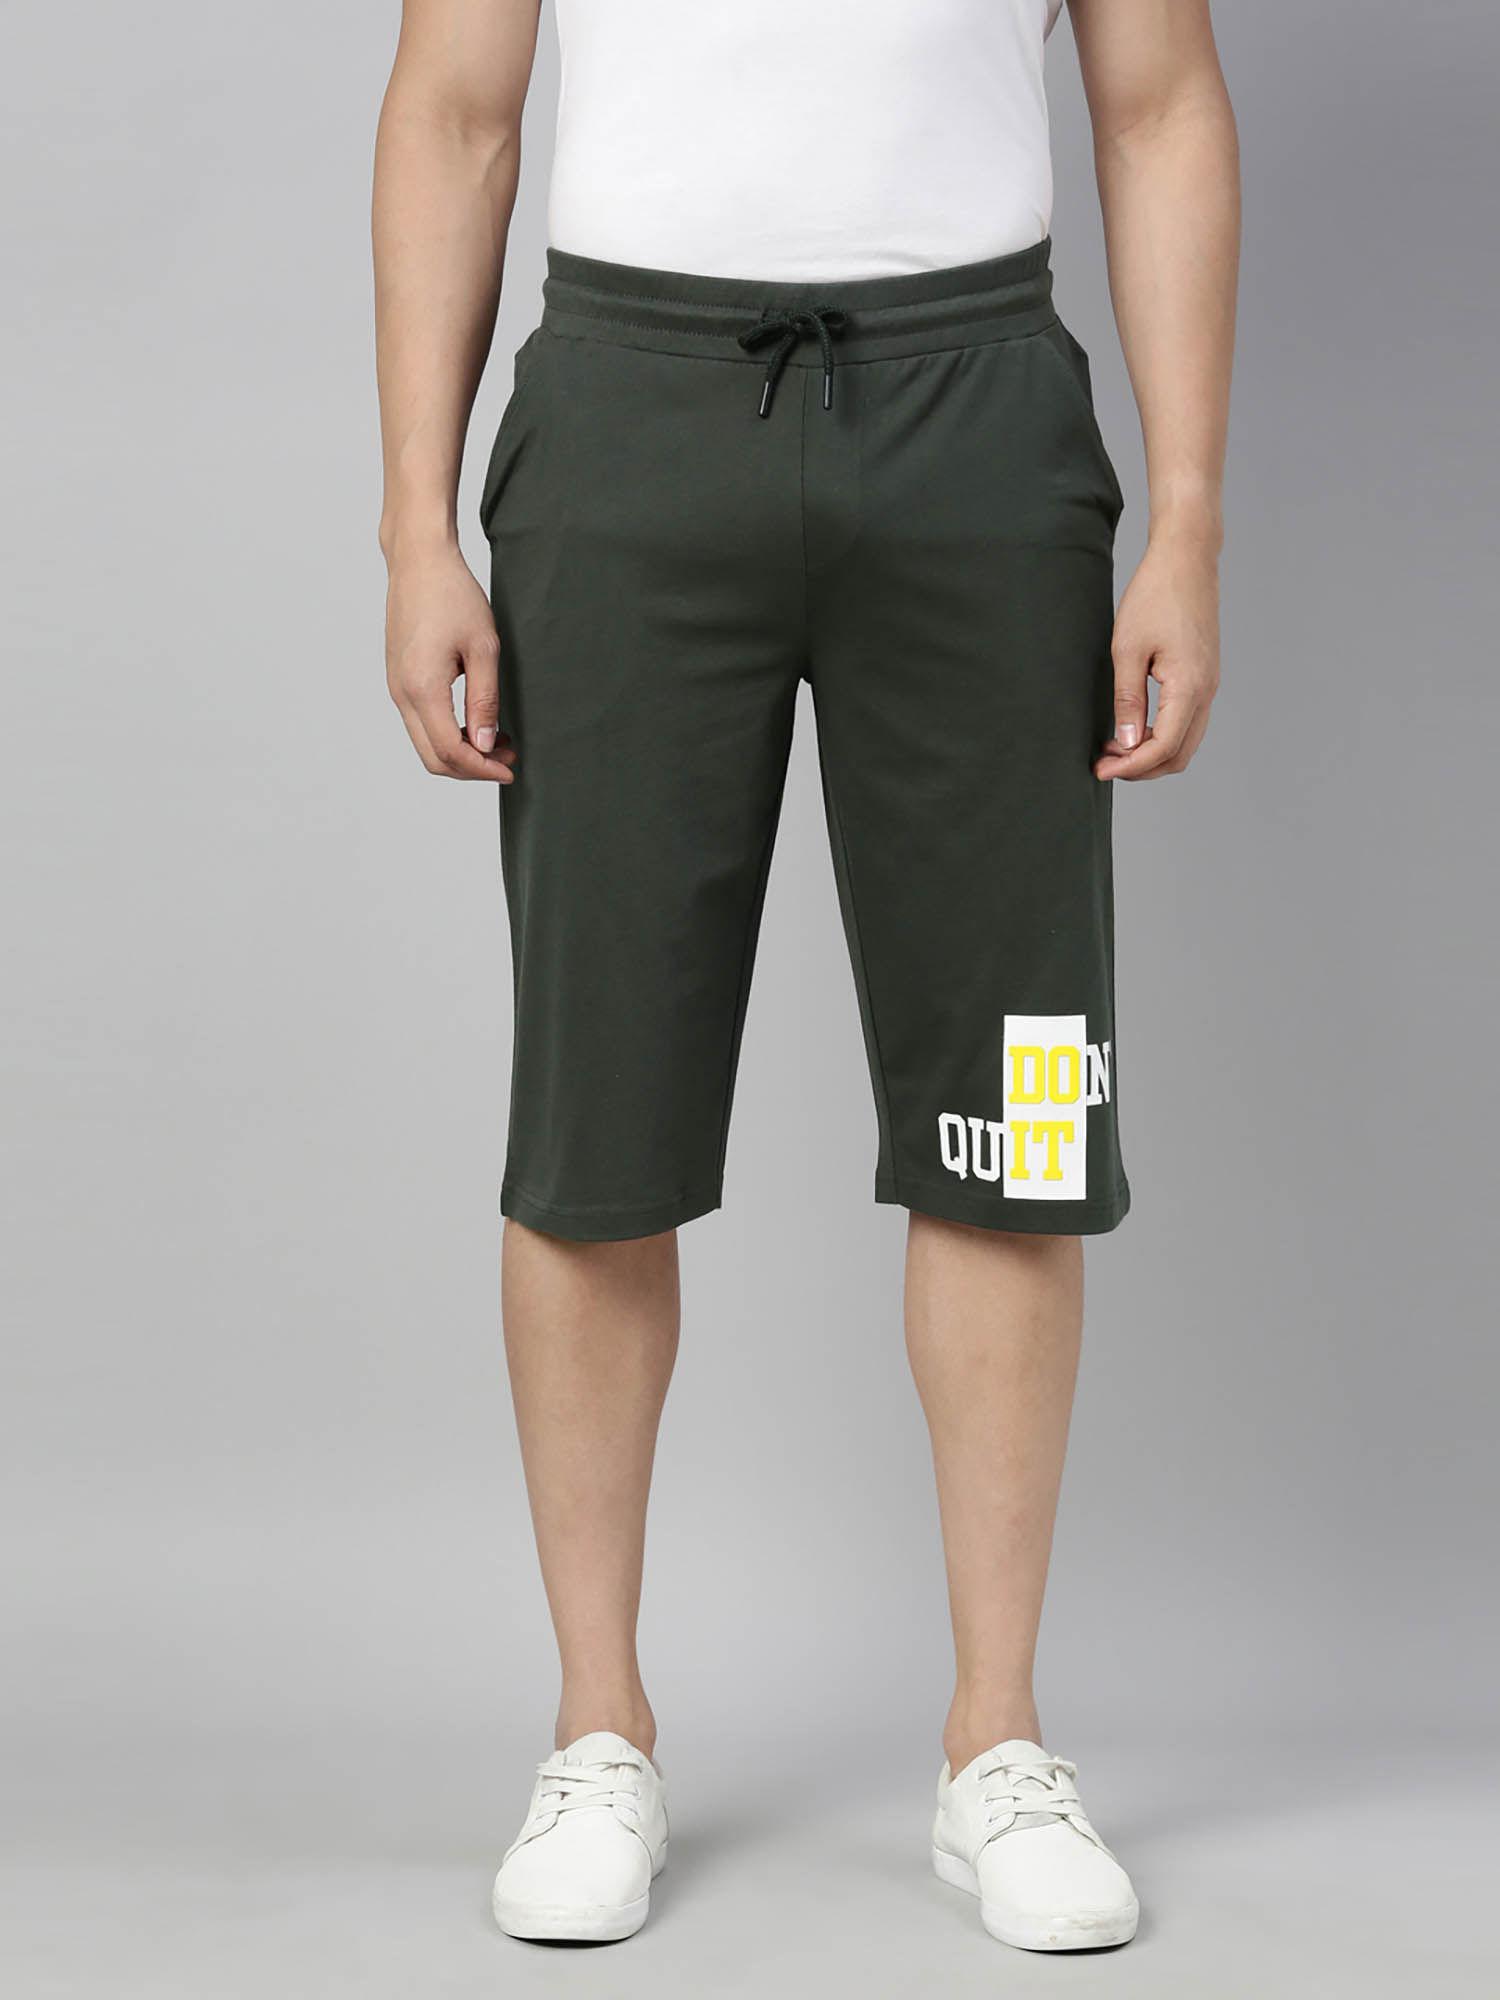 cotton green regular fit men's shorts